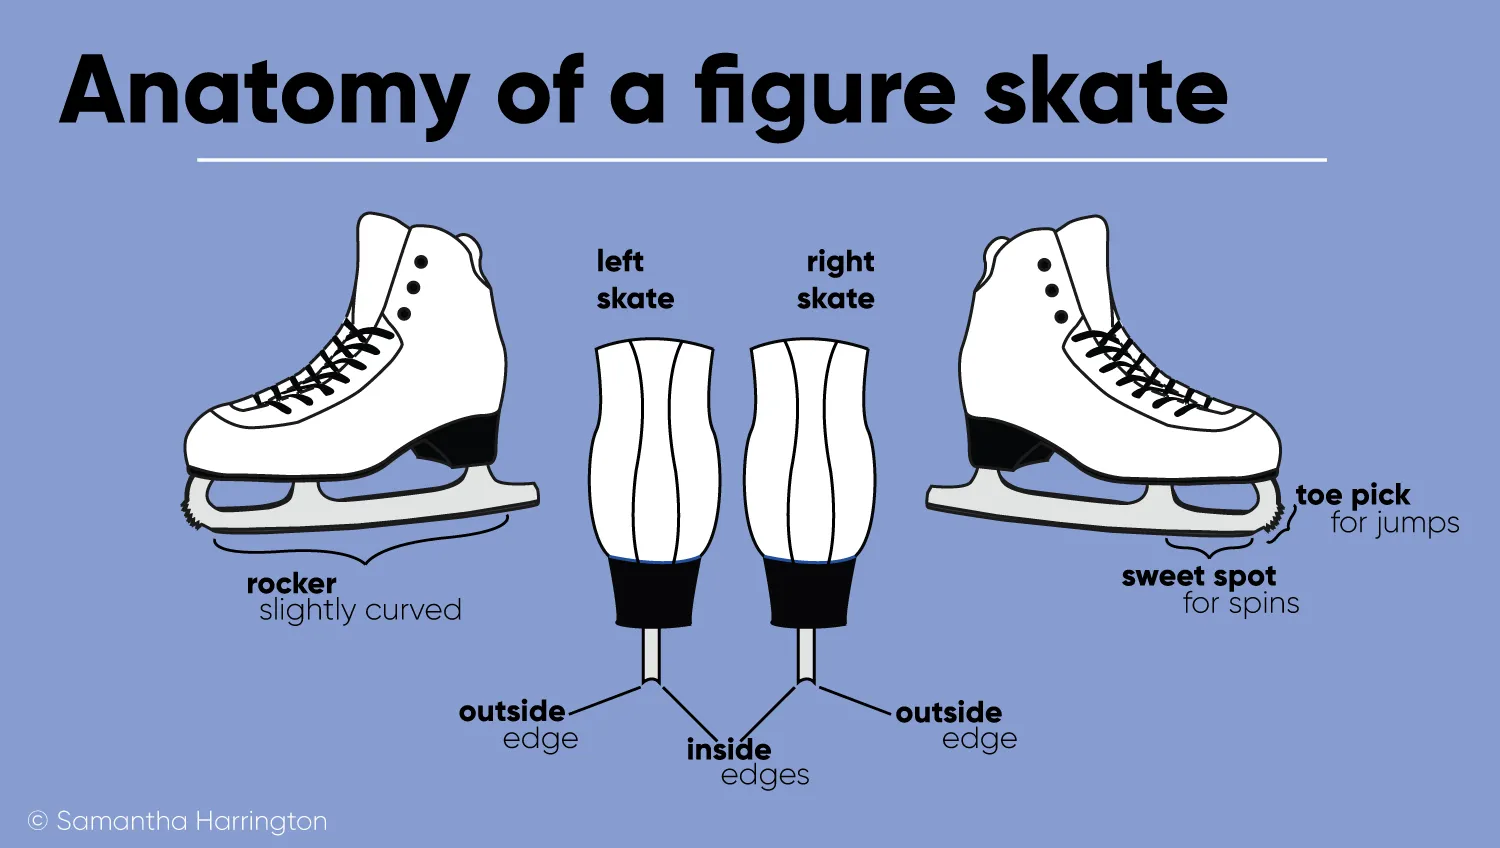 Anatomy of a figure skate